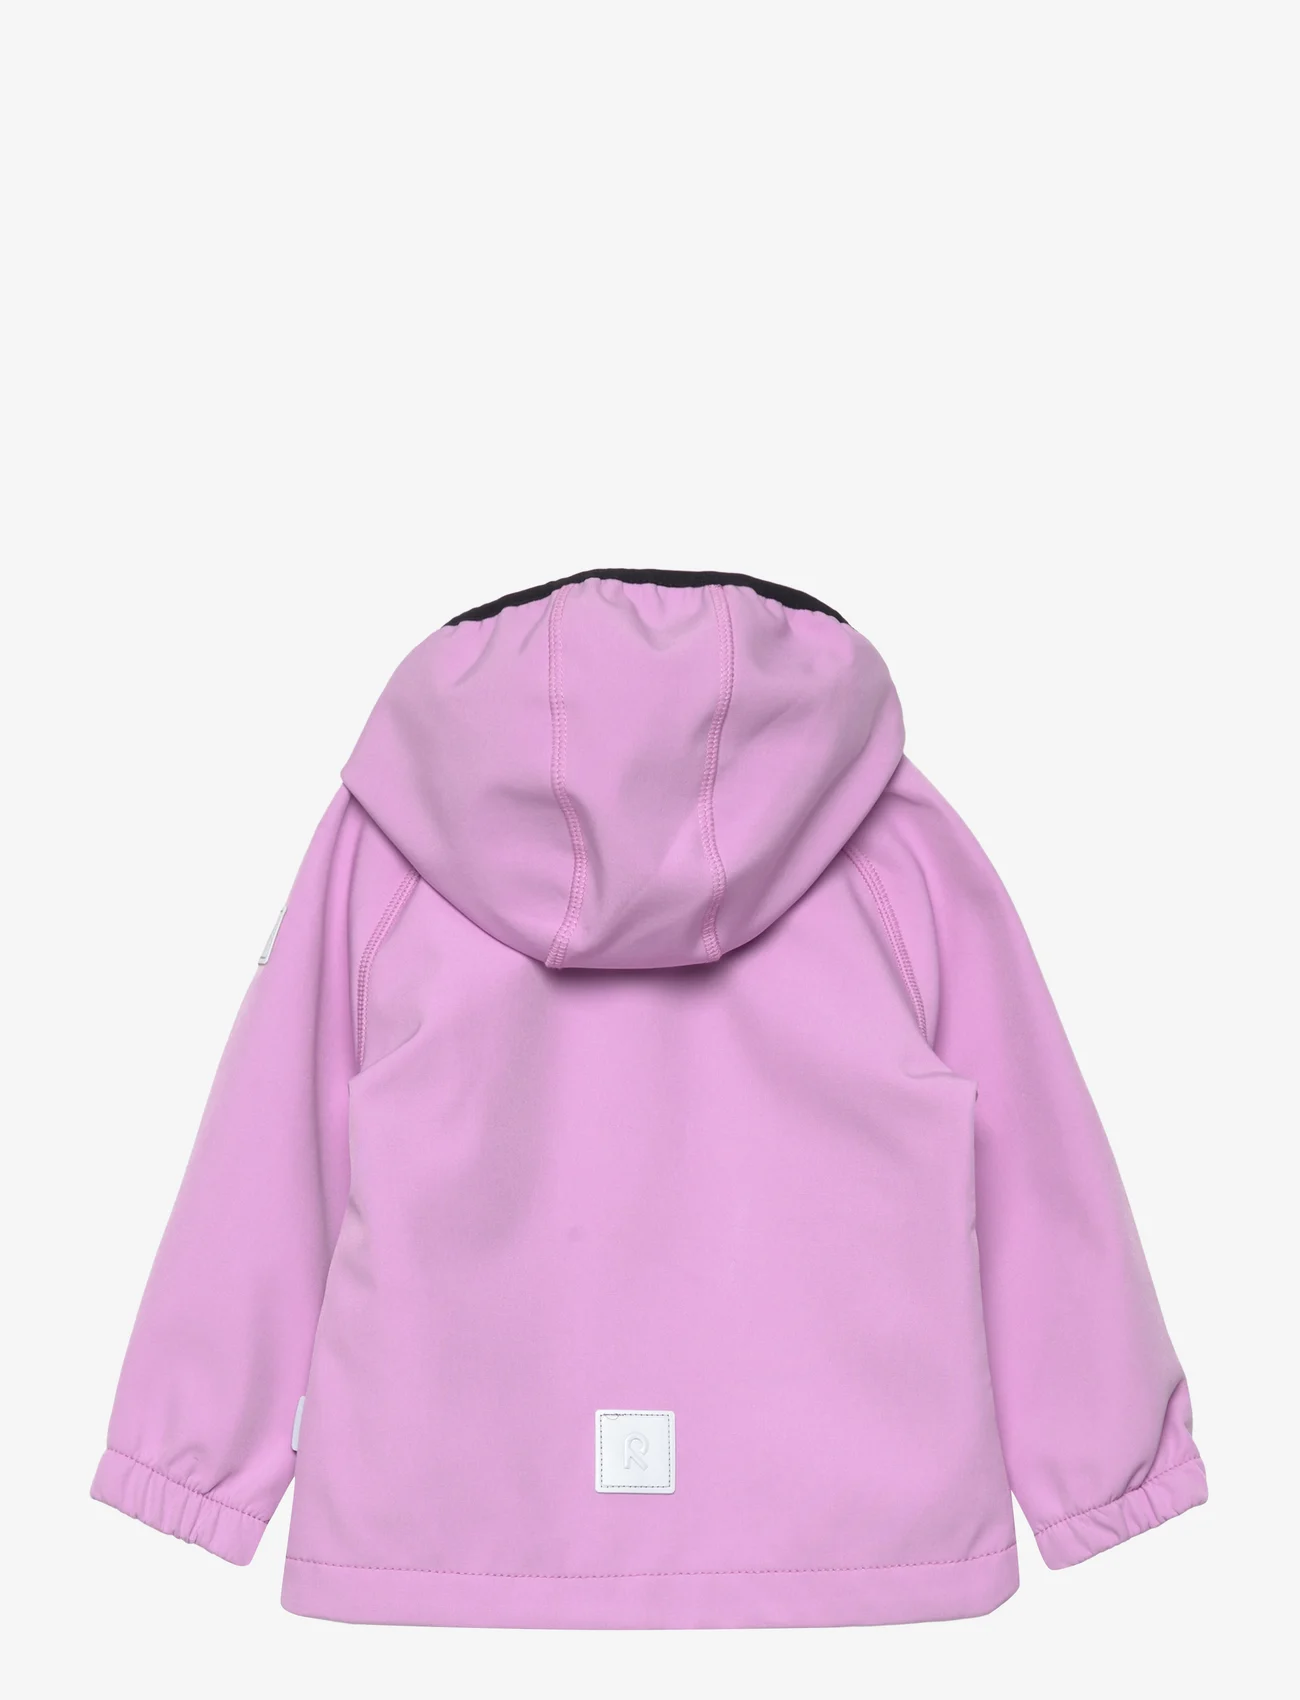 Reima - Kids' softshell jacket Vantti - børn - lilac pink - 1